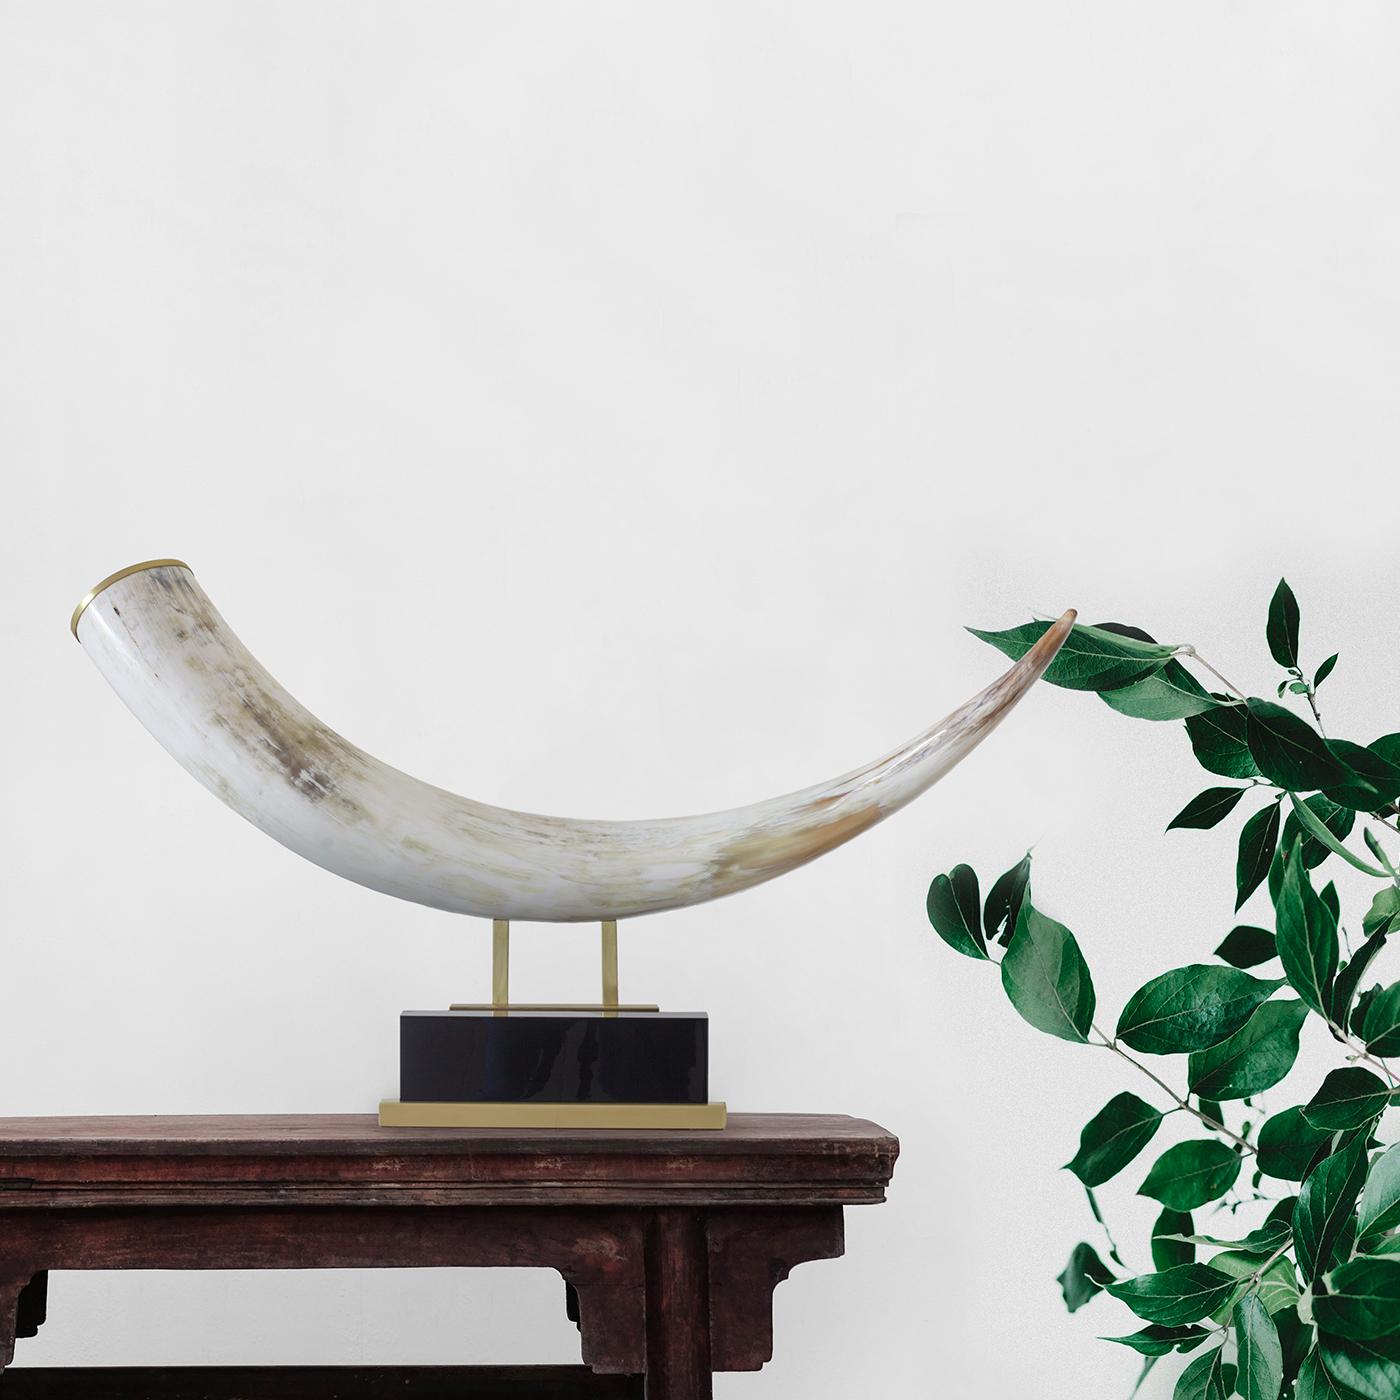 Italian Horn Sculpture by Zanchi 1952